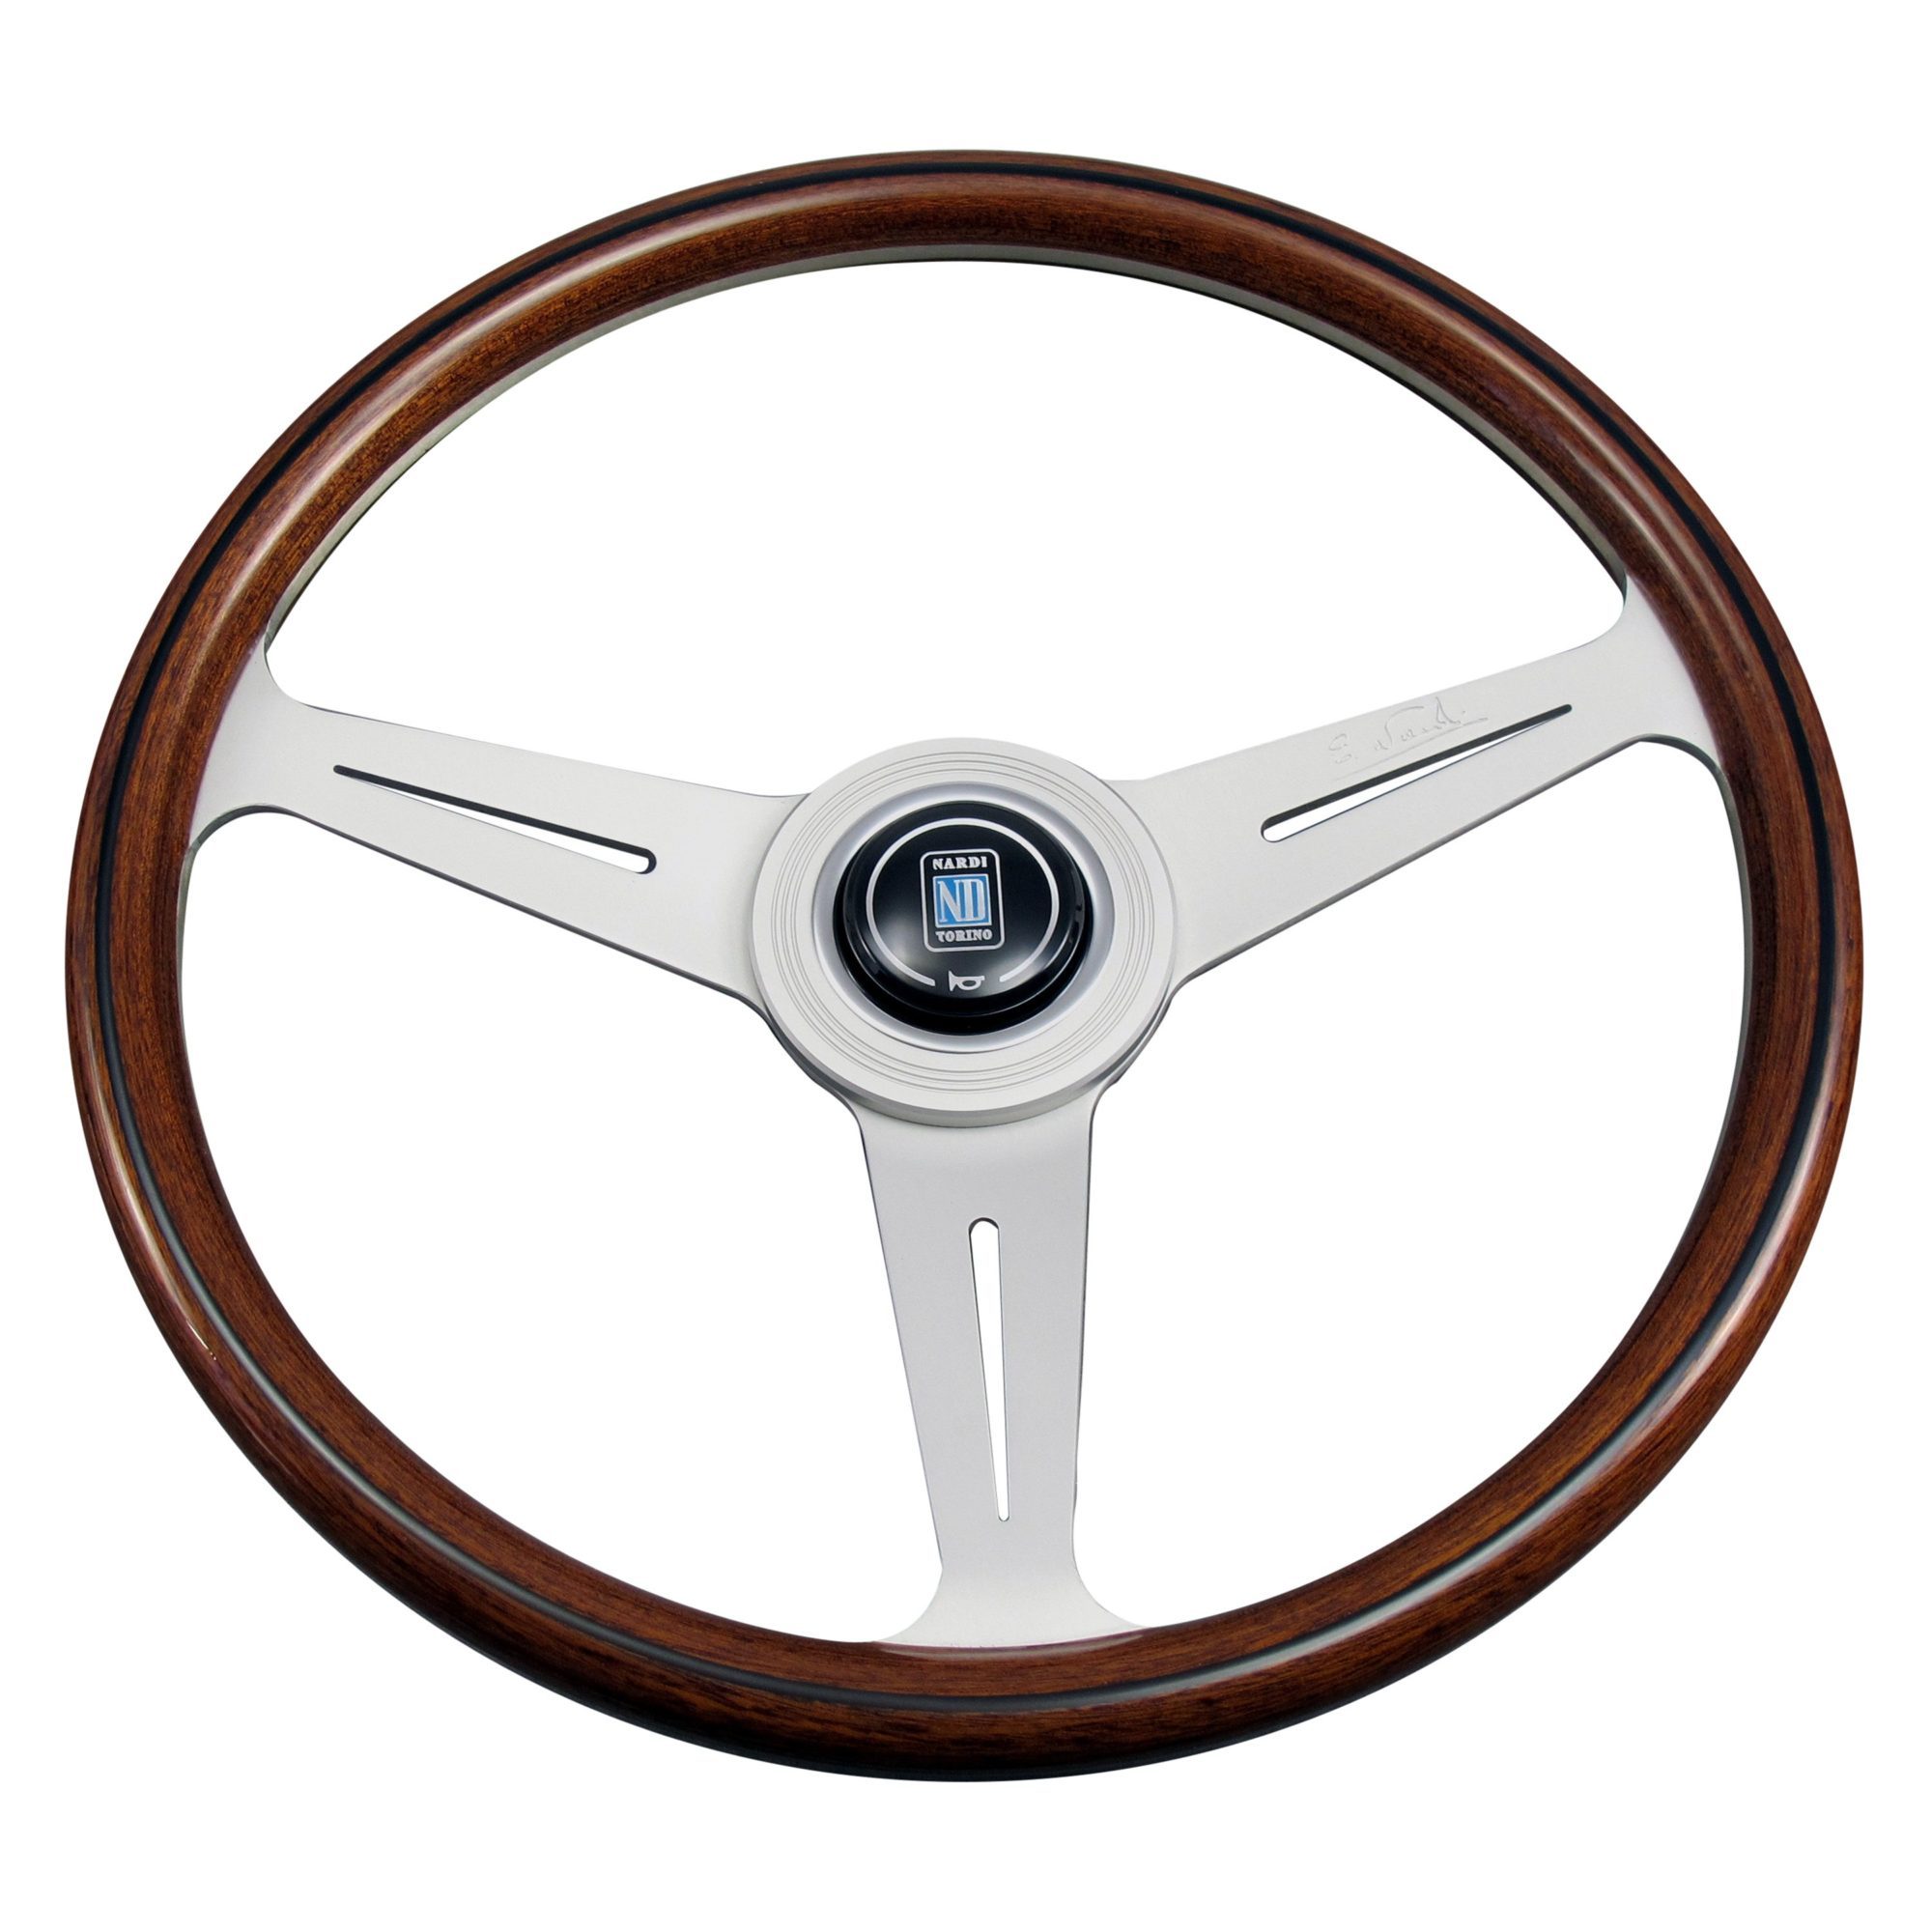 NARDI ND Classic 360mm Wood Steering Wheel